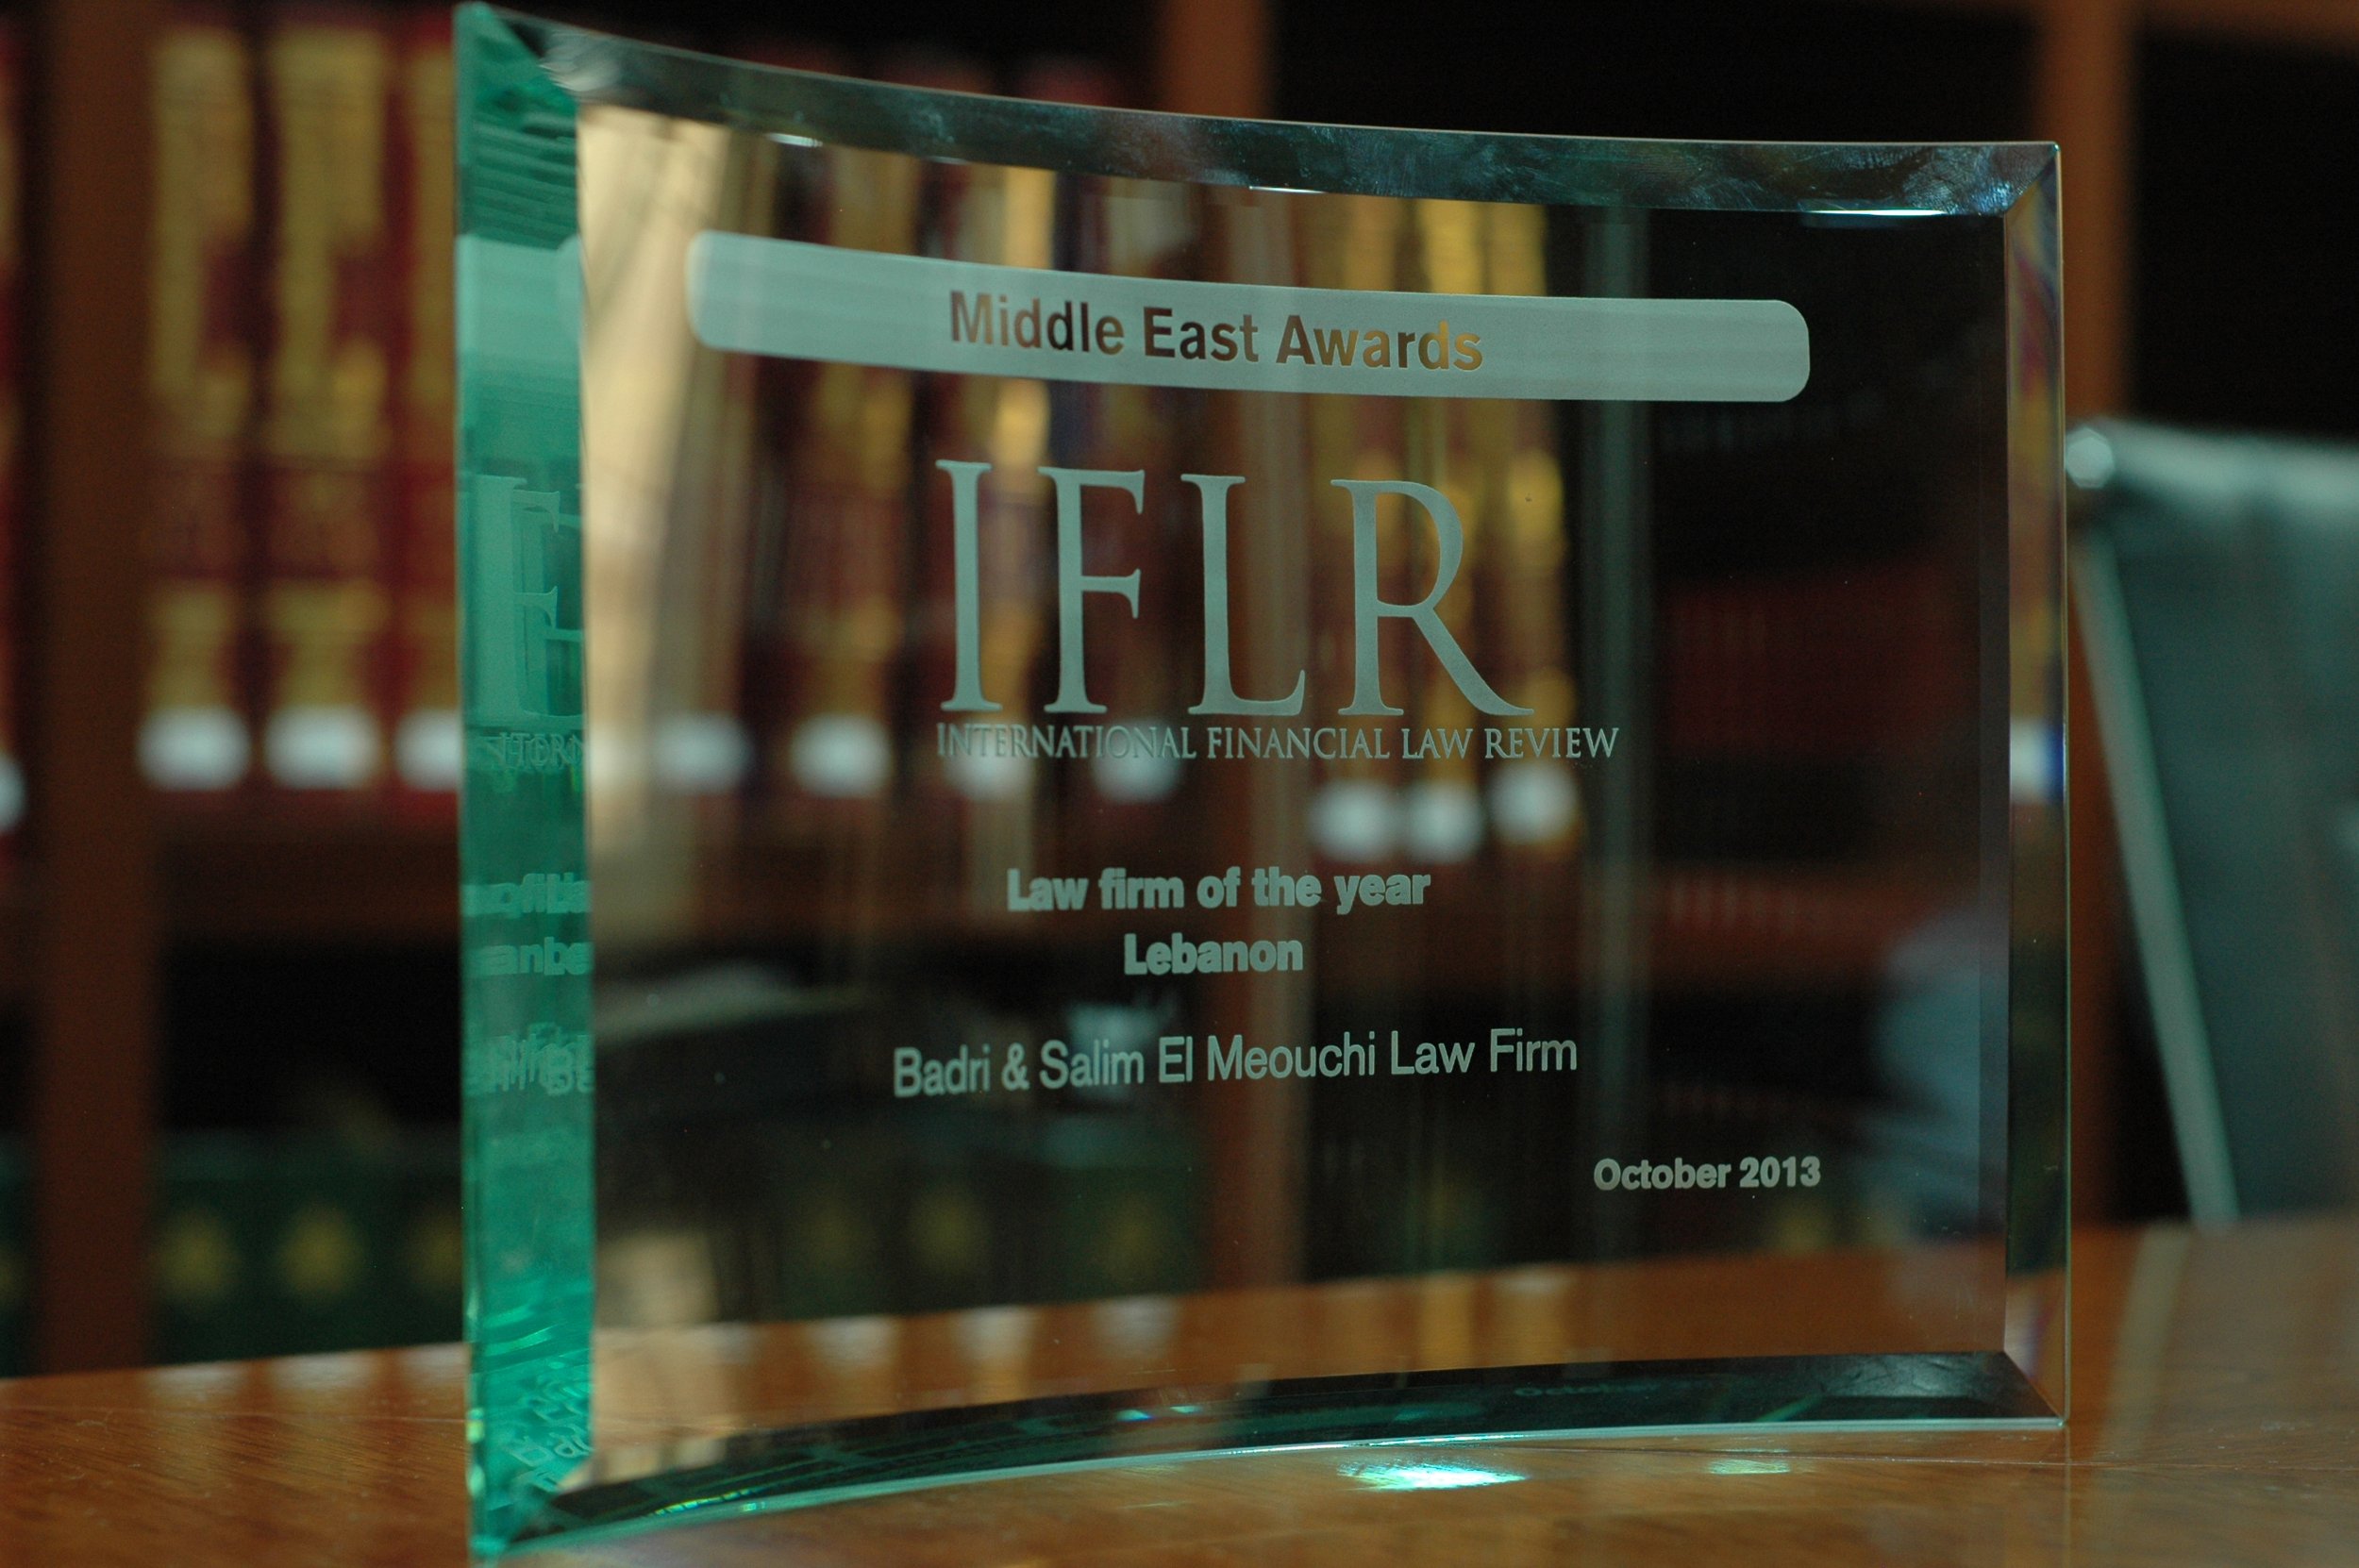 IFLR2013 Award